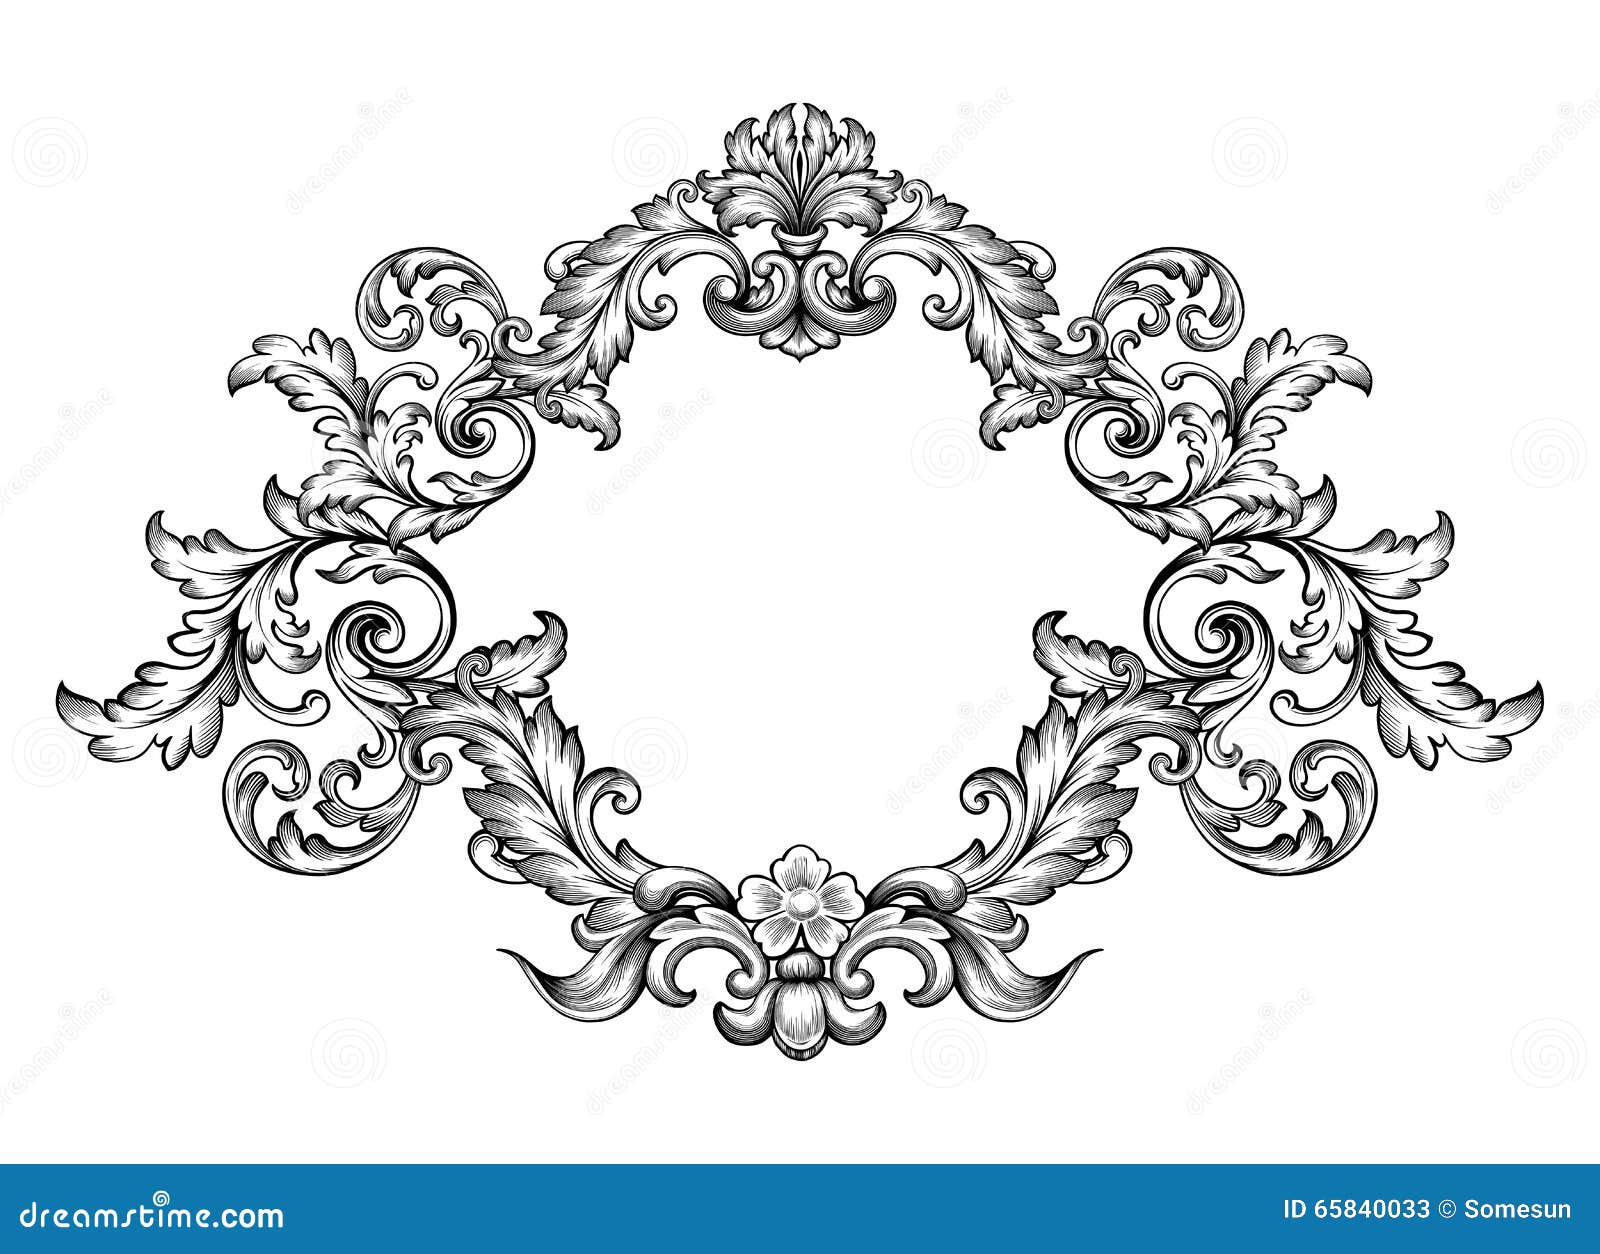 vintage baroque victorian frame border monogram floral ornament scroll engraved retro pattern tattoo calligraphic